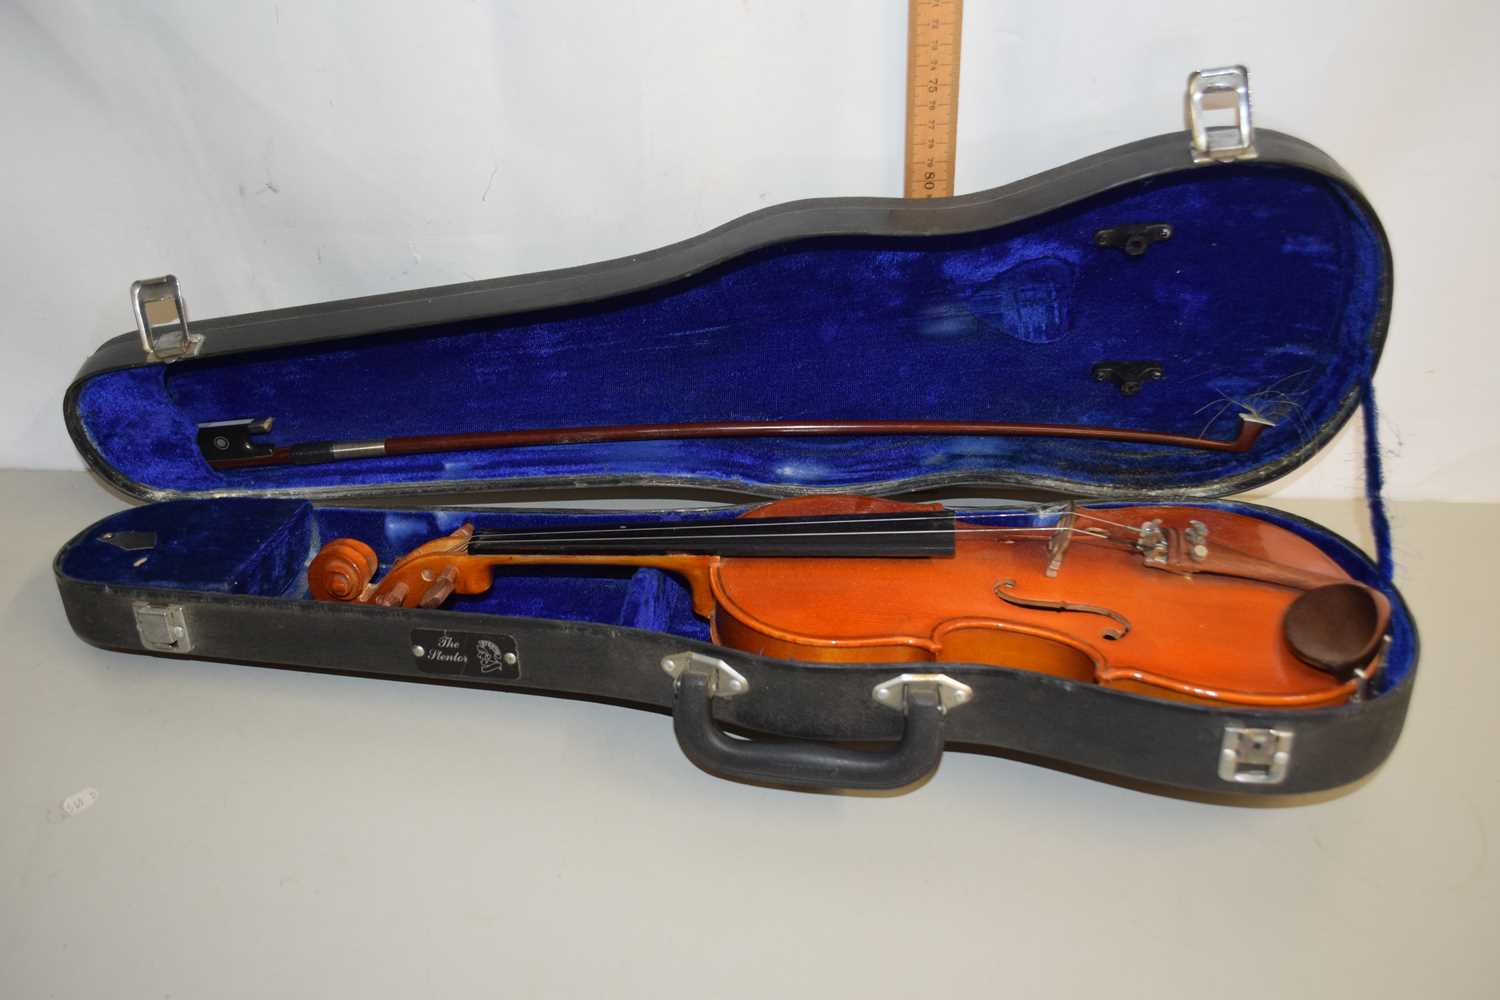 A Stentor student violin